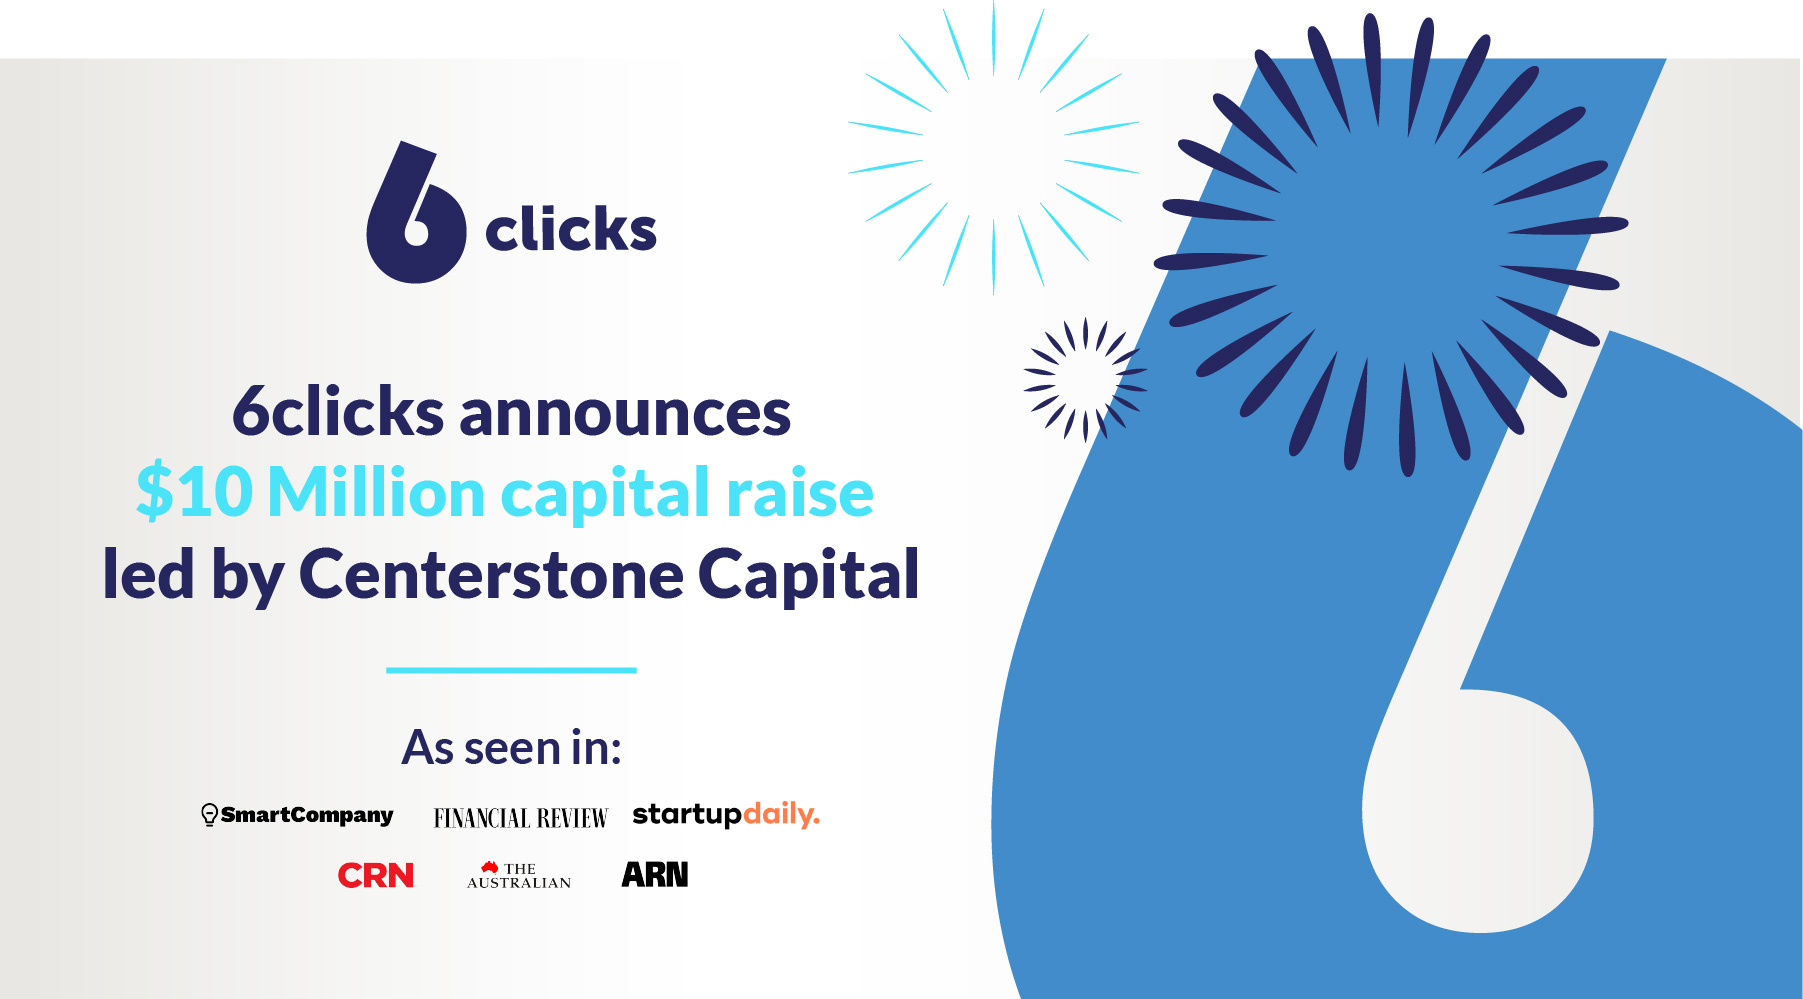 6clicks announces $10 Million capital raise led by Centerstone Capital